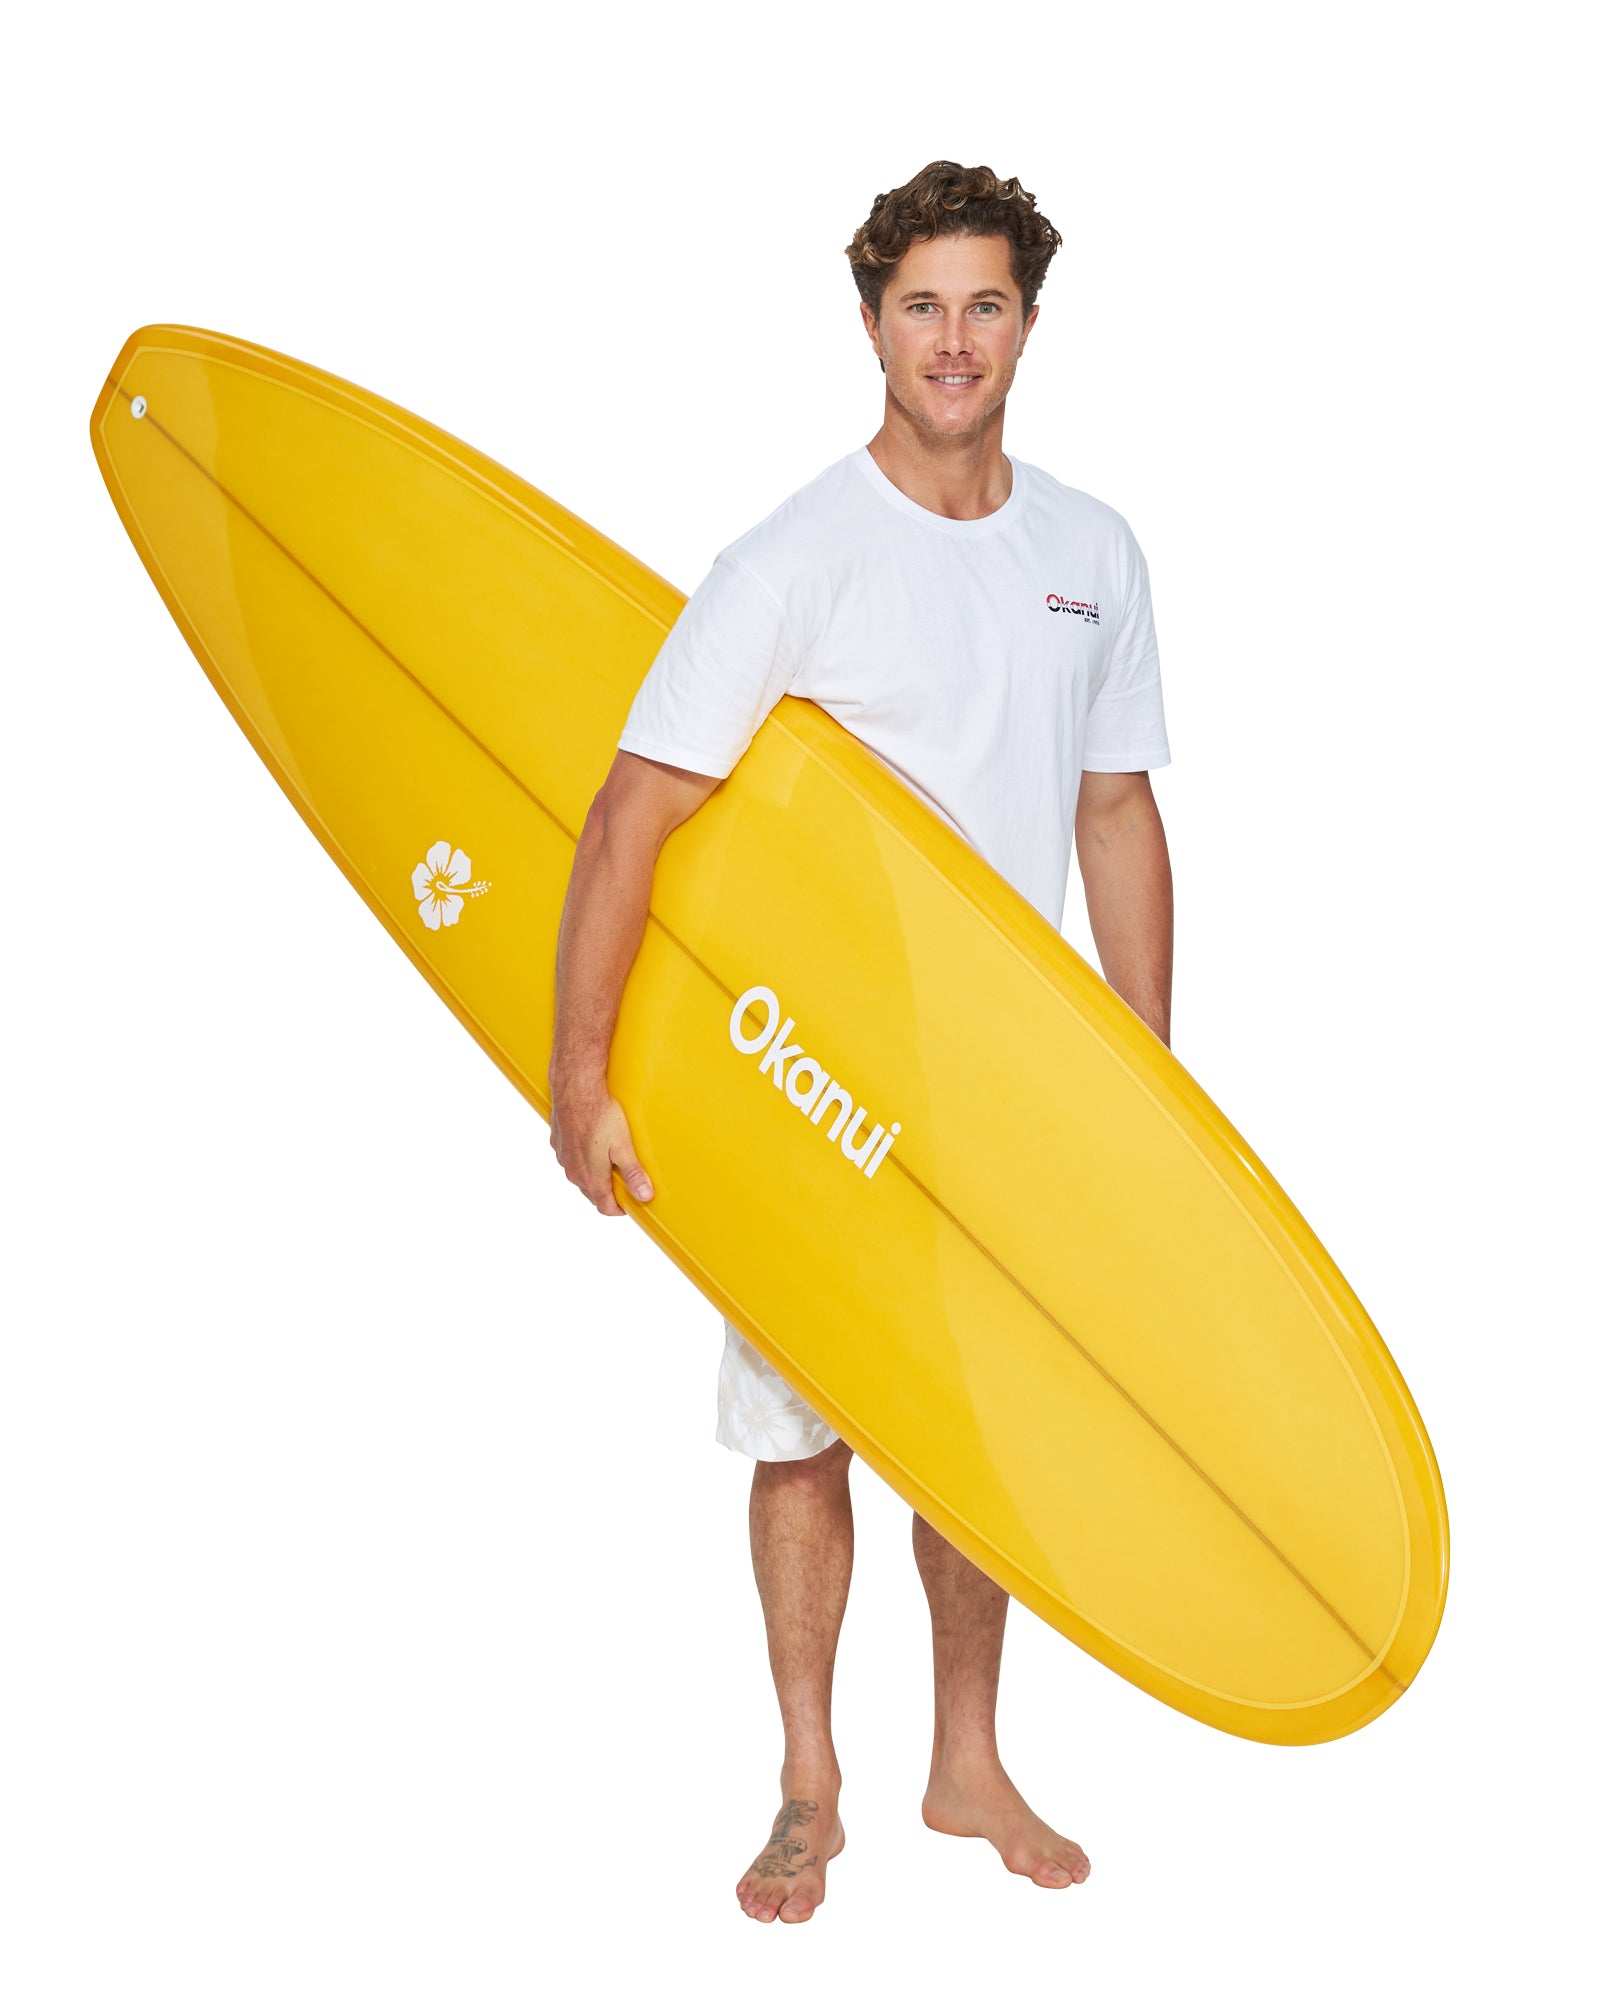 Surfboard - The Mini Mal - Mustard - 7'0"